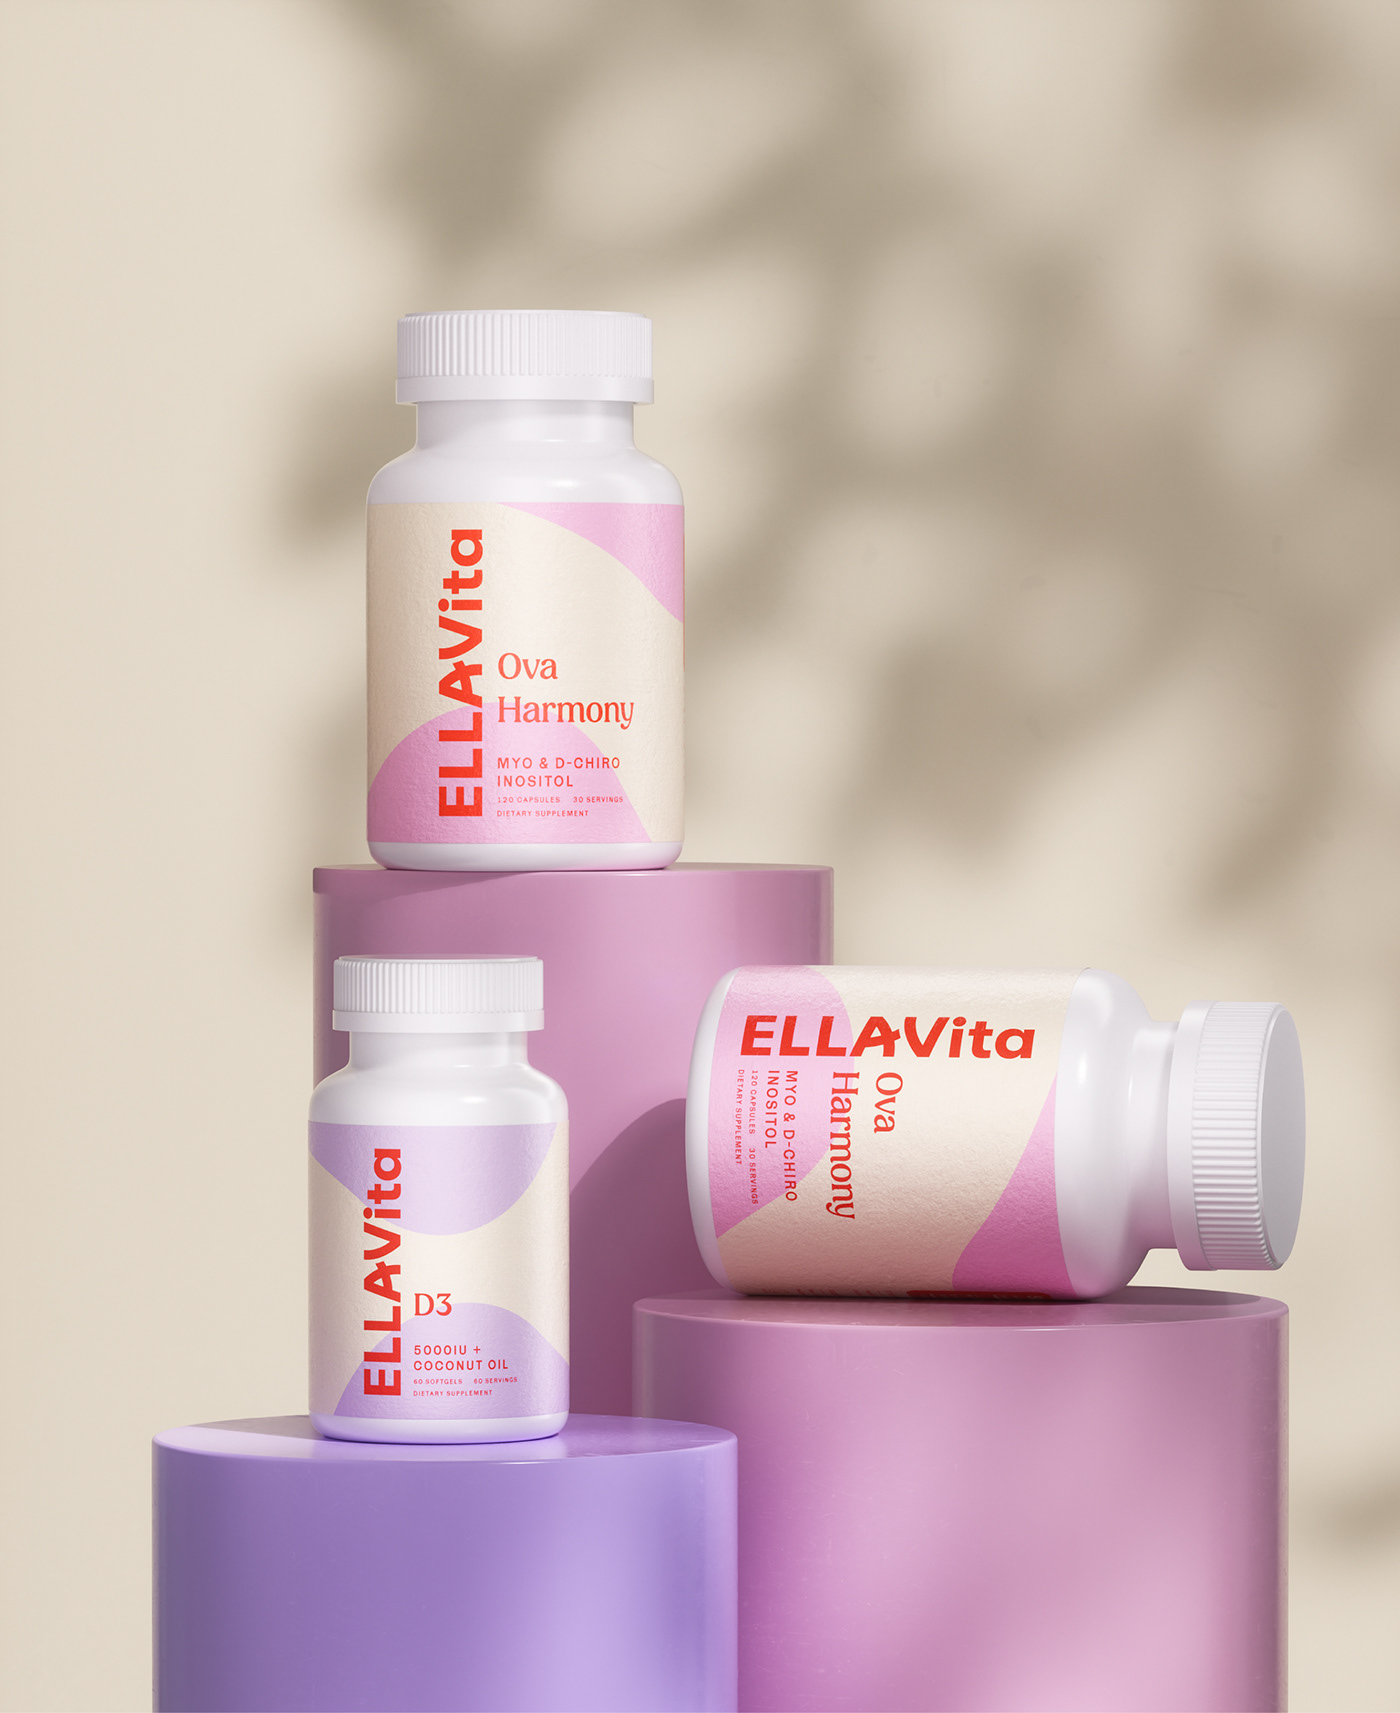 branding  logo packaging design medicine supplement vitamin Health medical feminine inositol